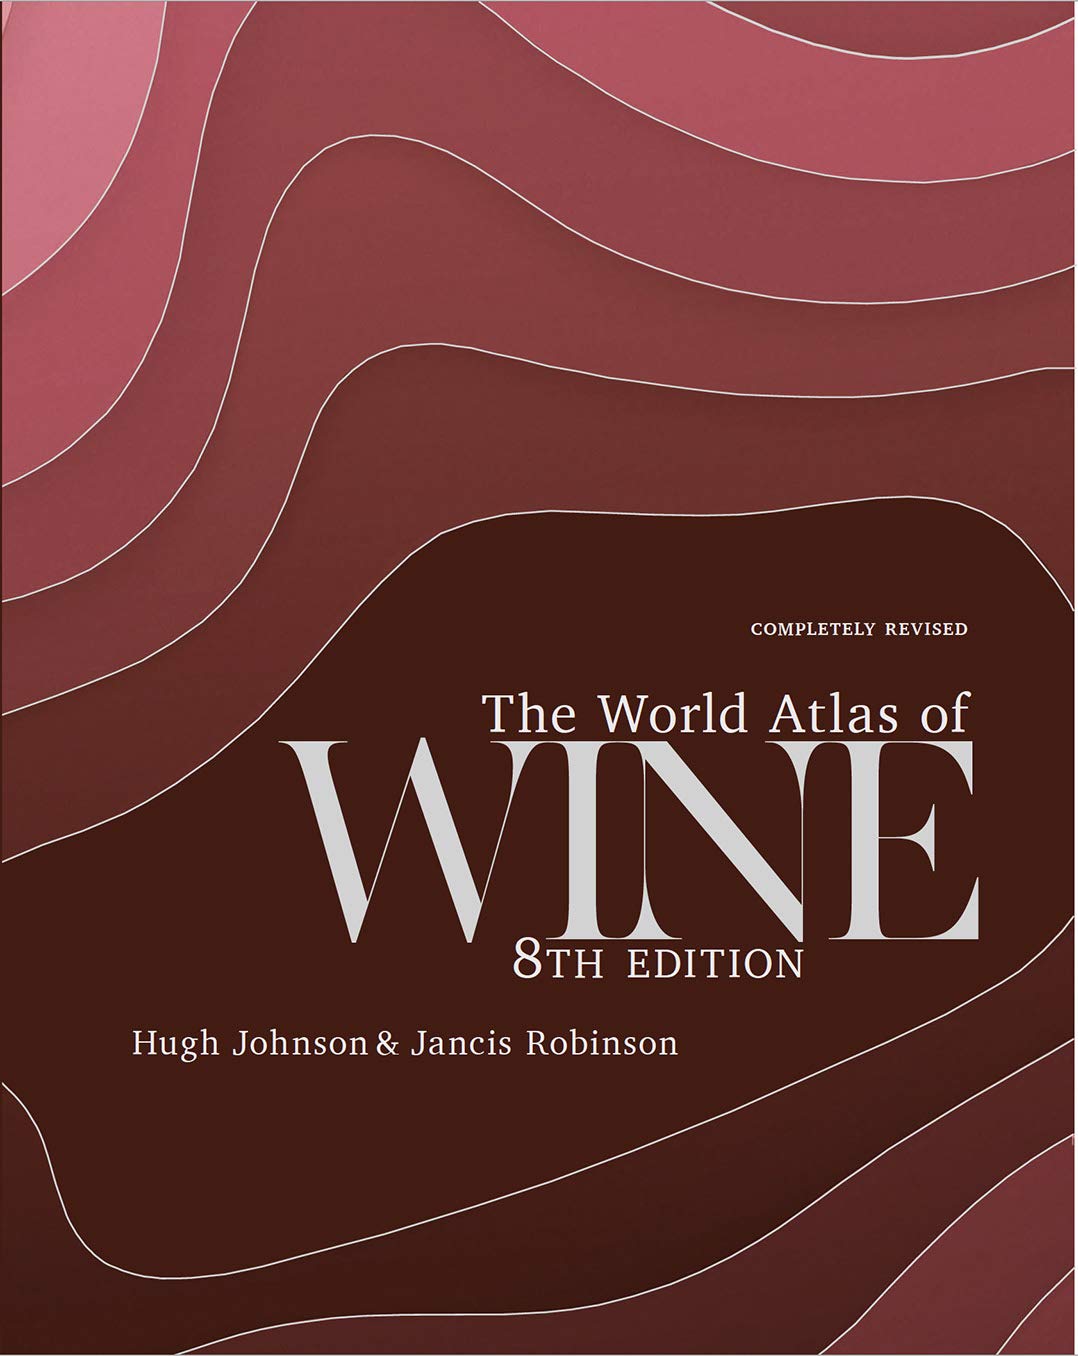 The World Atlas of Wine 8th Edition (Hugh Johnson, Jancis Robinson)